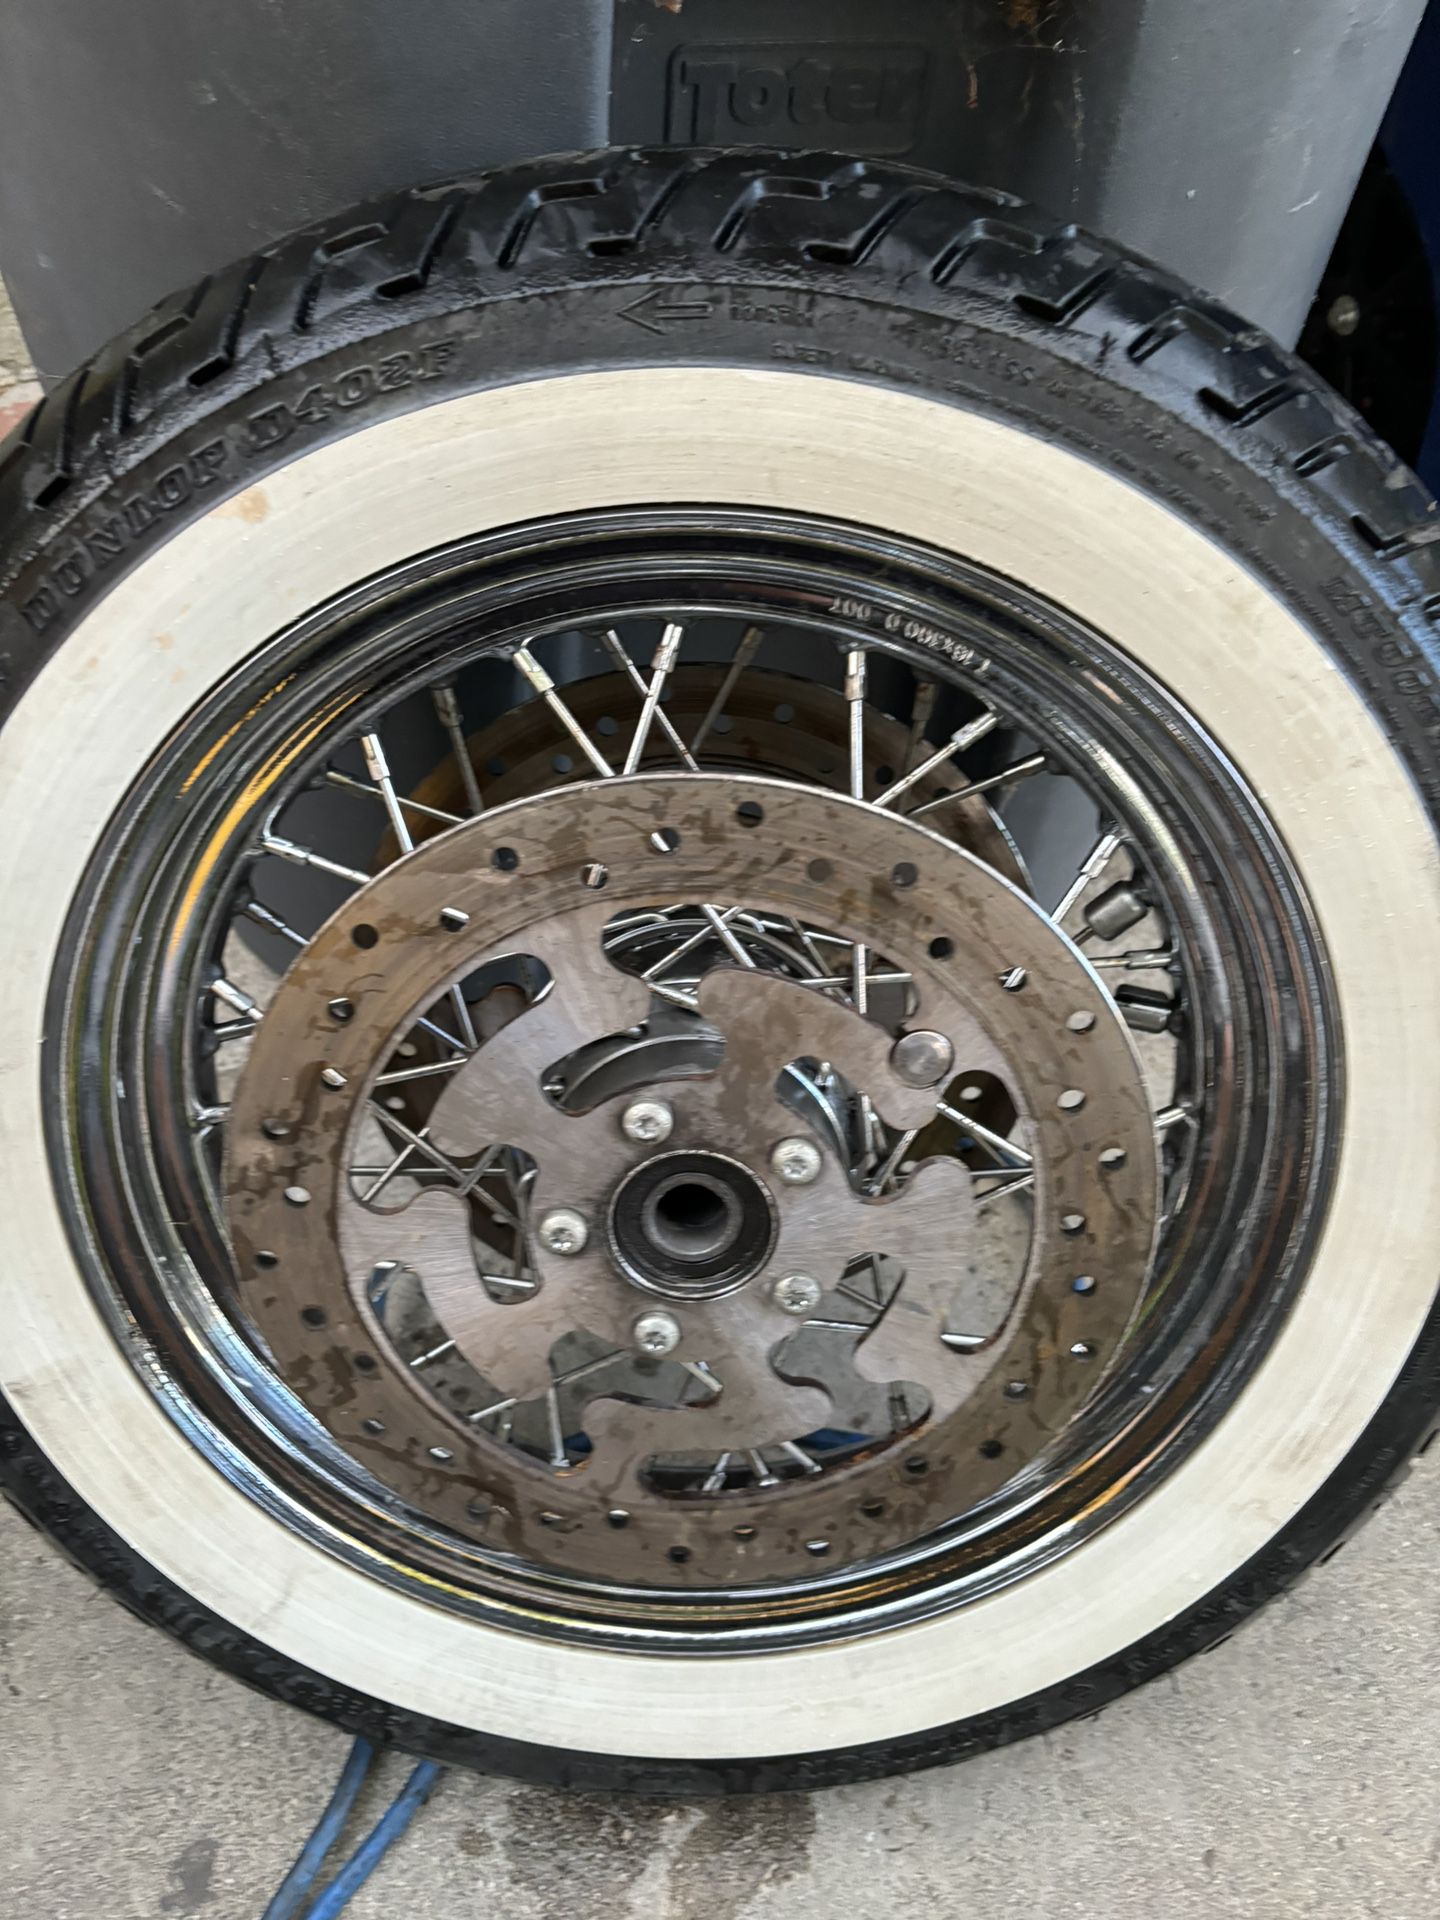 Harley Davidson Wheel 